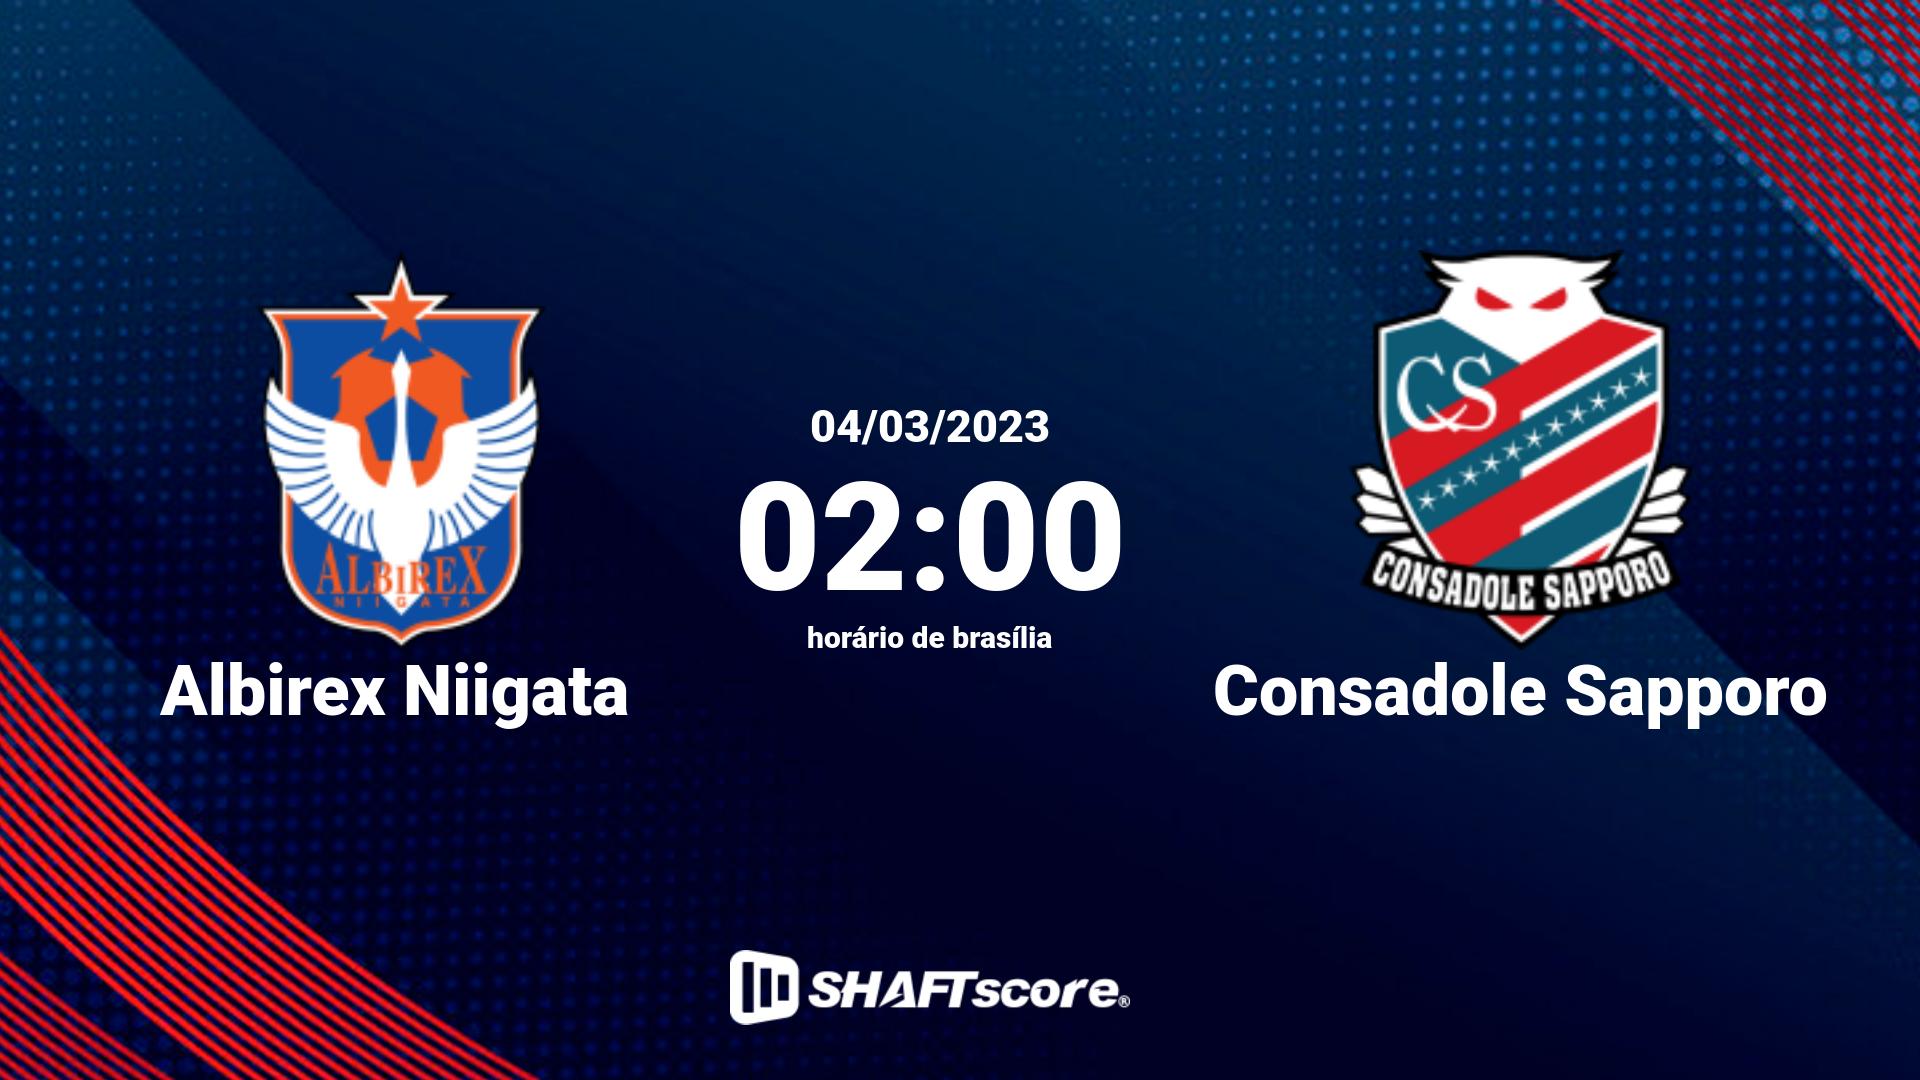 Estatísticas do jogo Albirex Niigata vs Consadole Sapporo 04.03 02:00